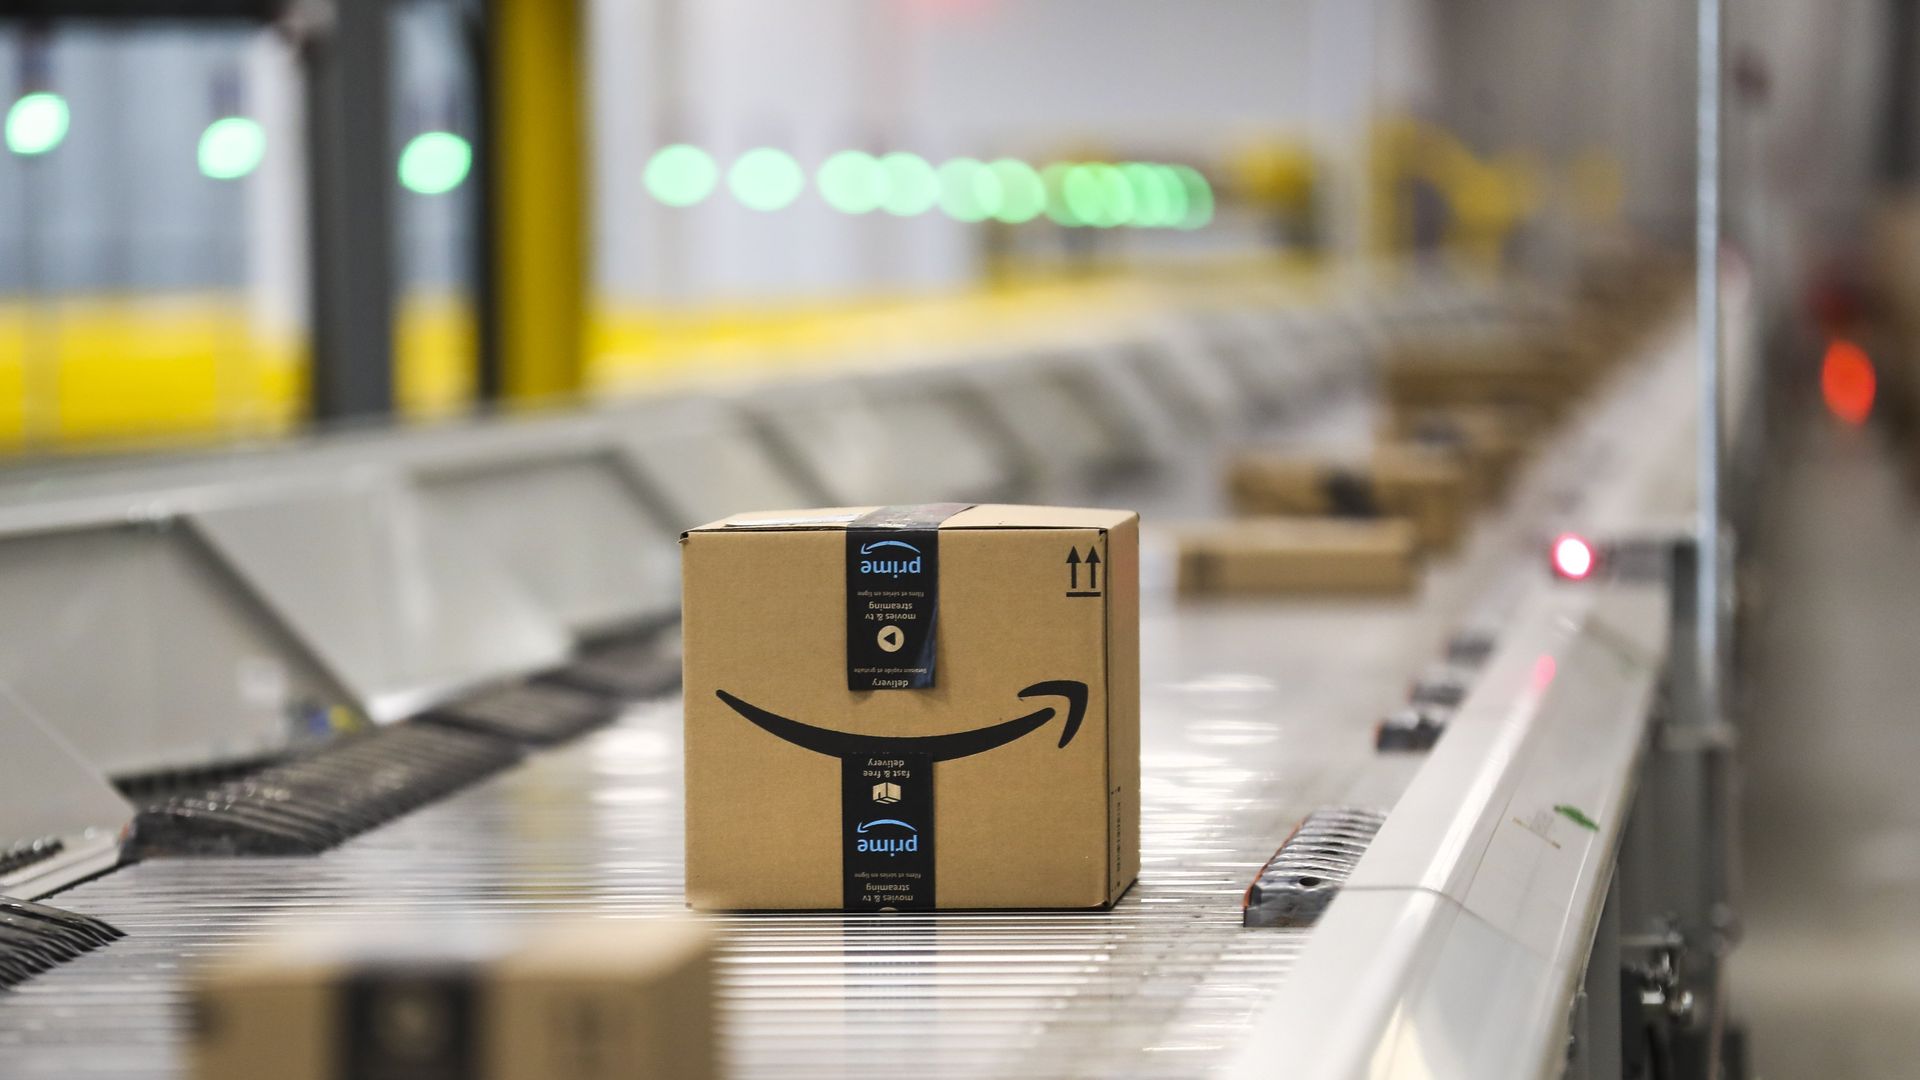 Amazon boxes on a conveyor belt.